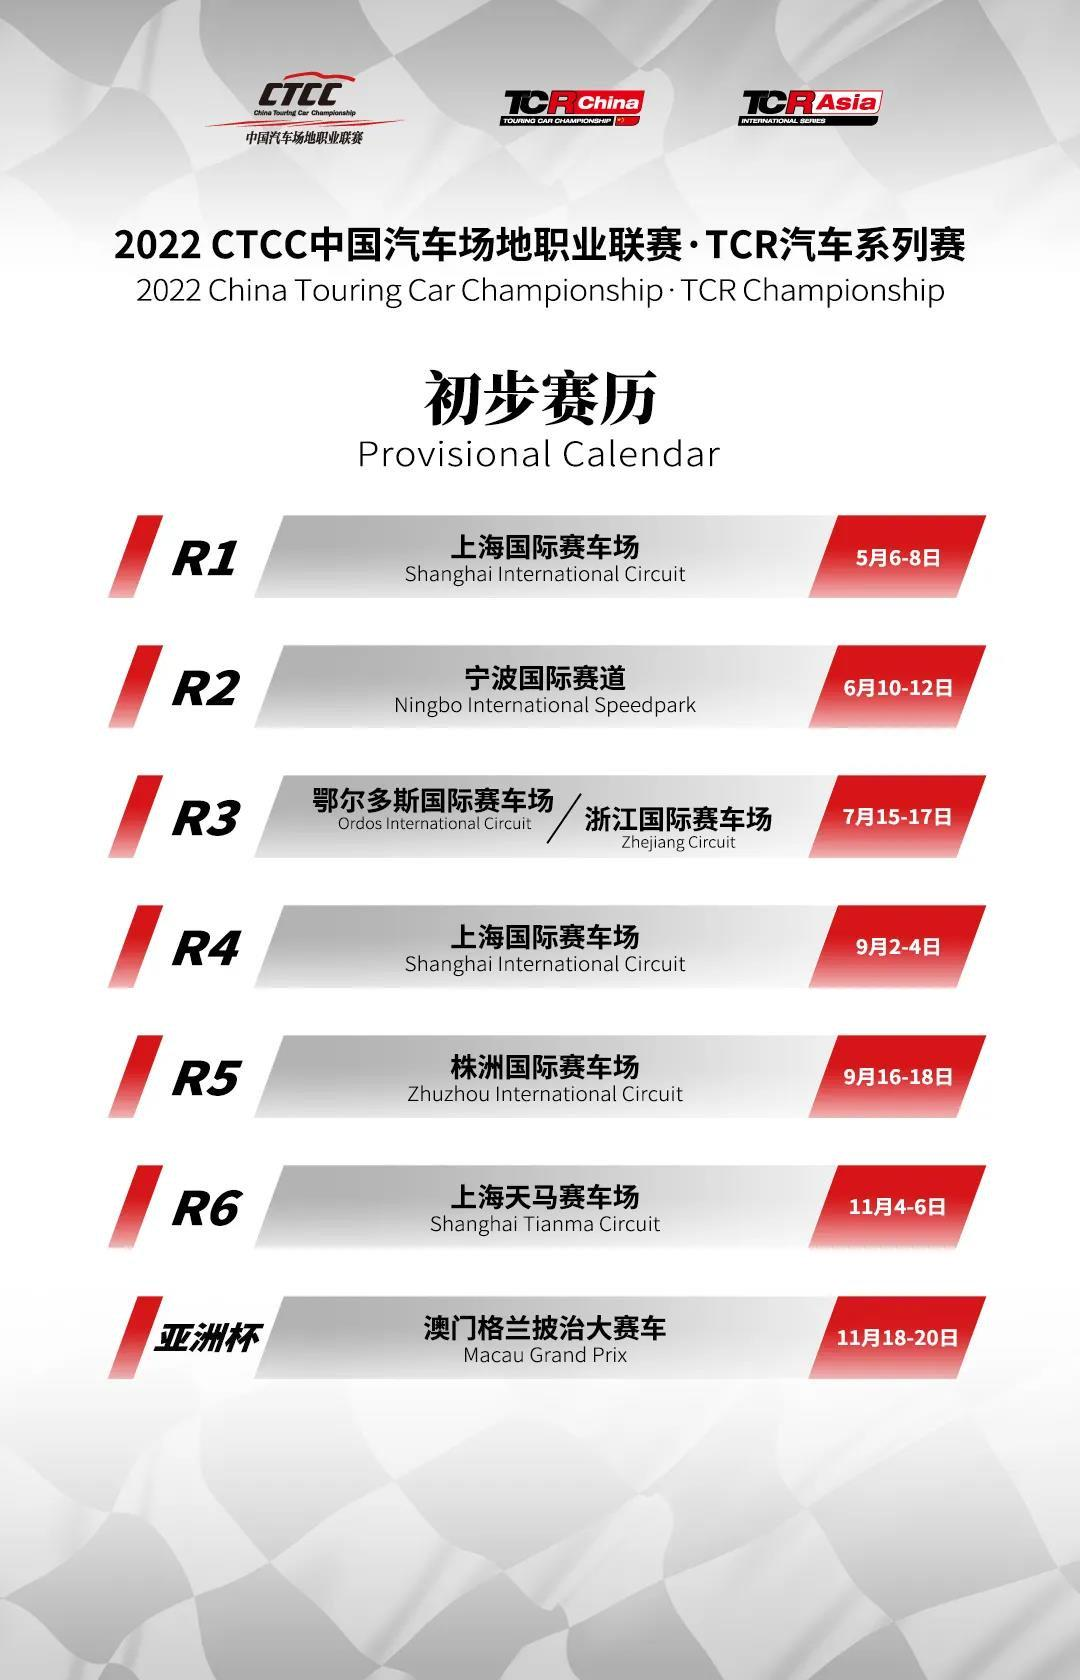 2022 CTCC中国汽车场地职业联赛·TCR汽车系列赛初步赛历发布